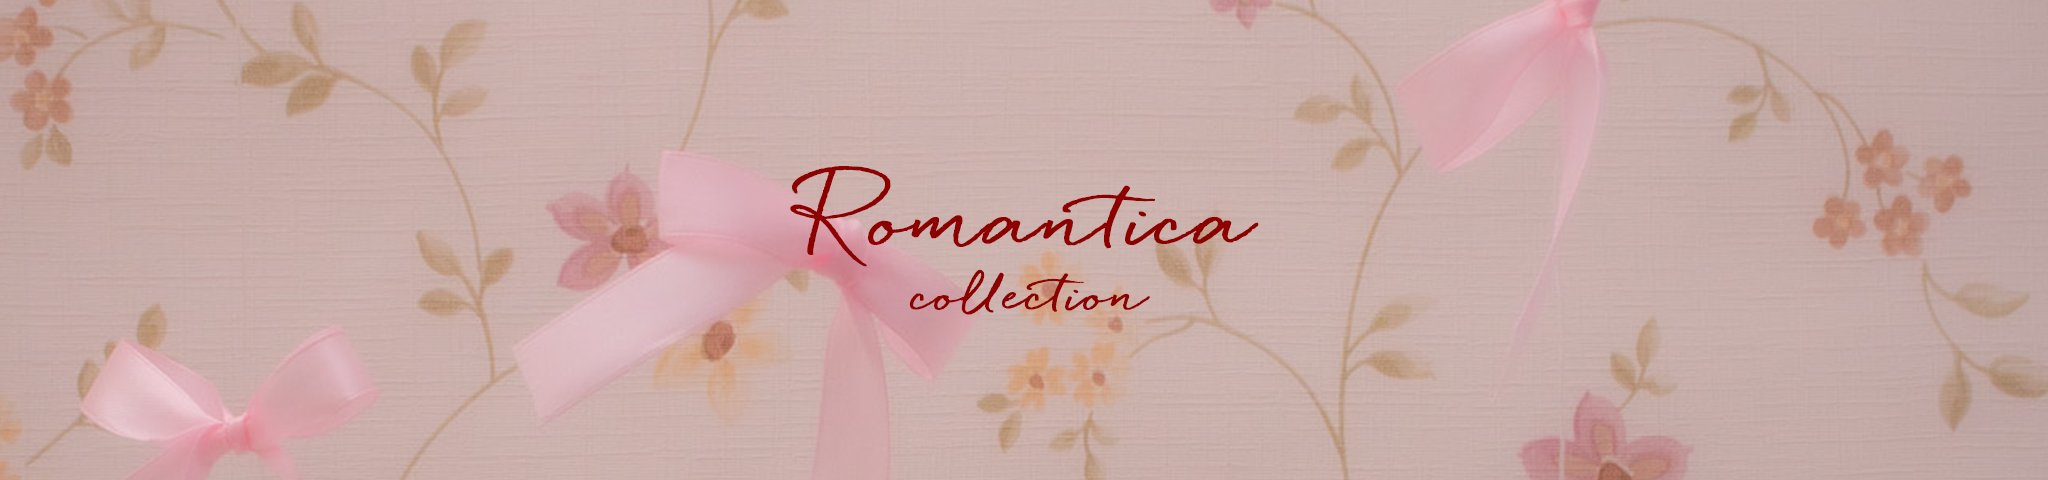 Romantica Collection